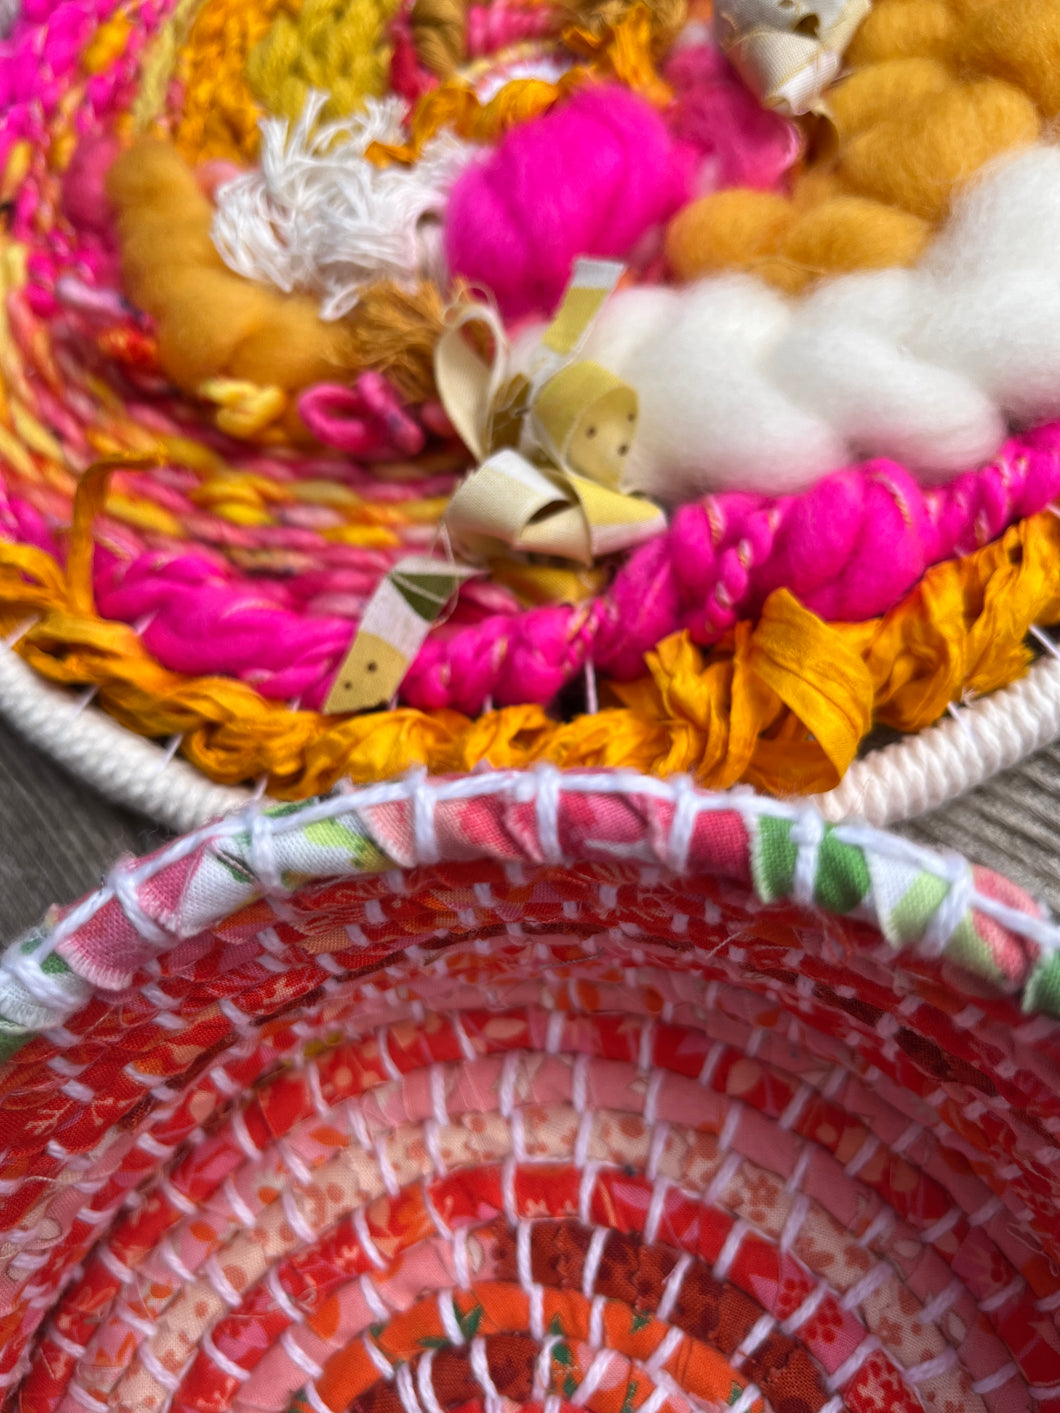 Make something be well digital mini-course DIY creative projects fibre textiles baskets weaving circular creativity Carmen Bohn Ply Studio